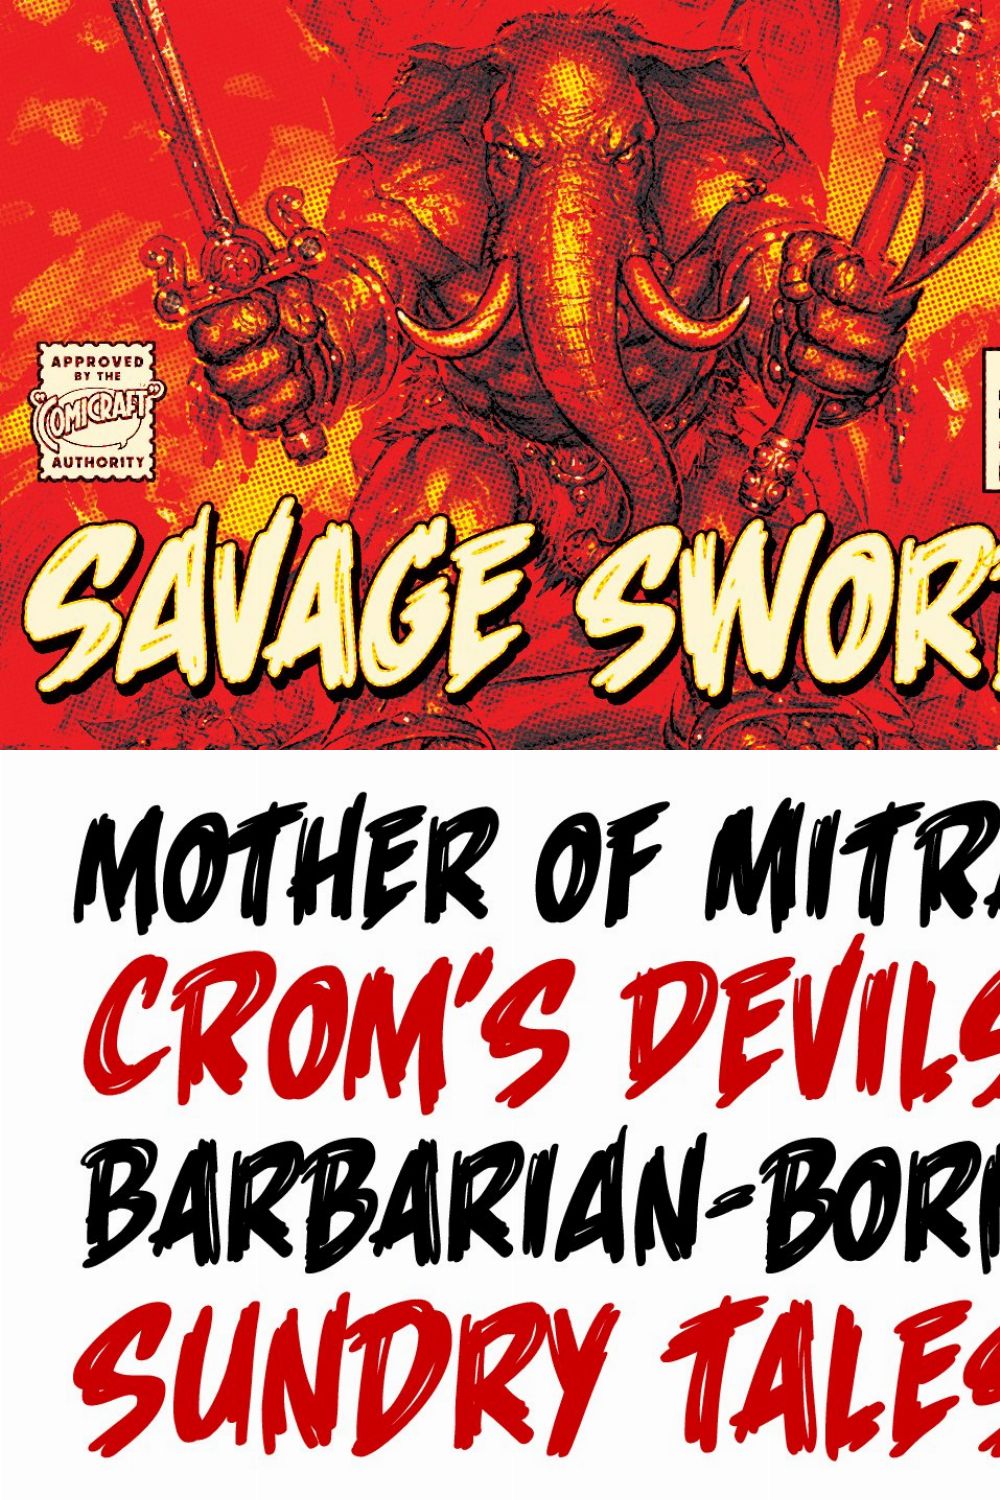 Savage Sword - angry brush comic SFX pinterest preview image.